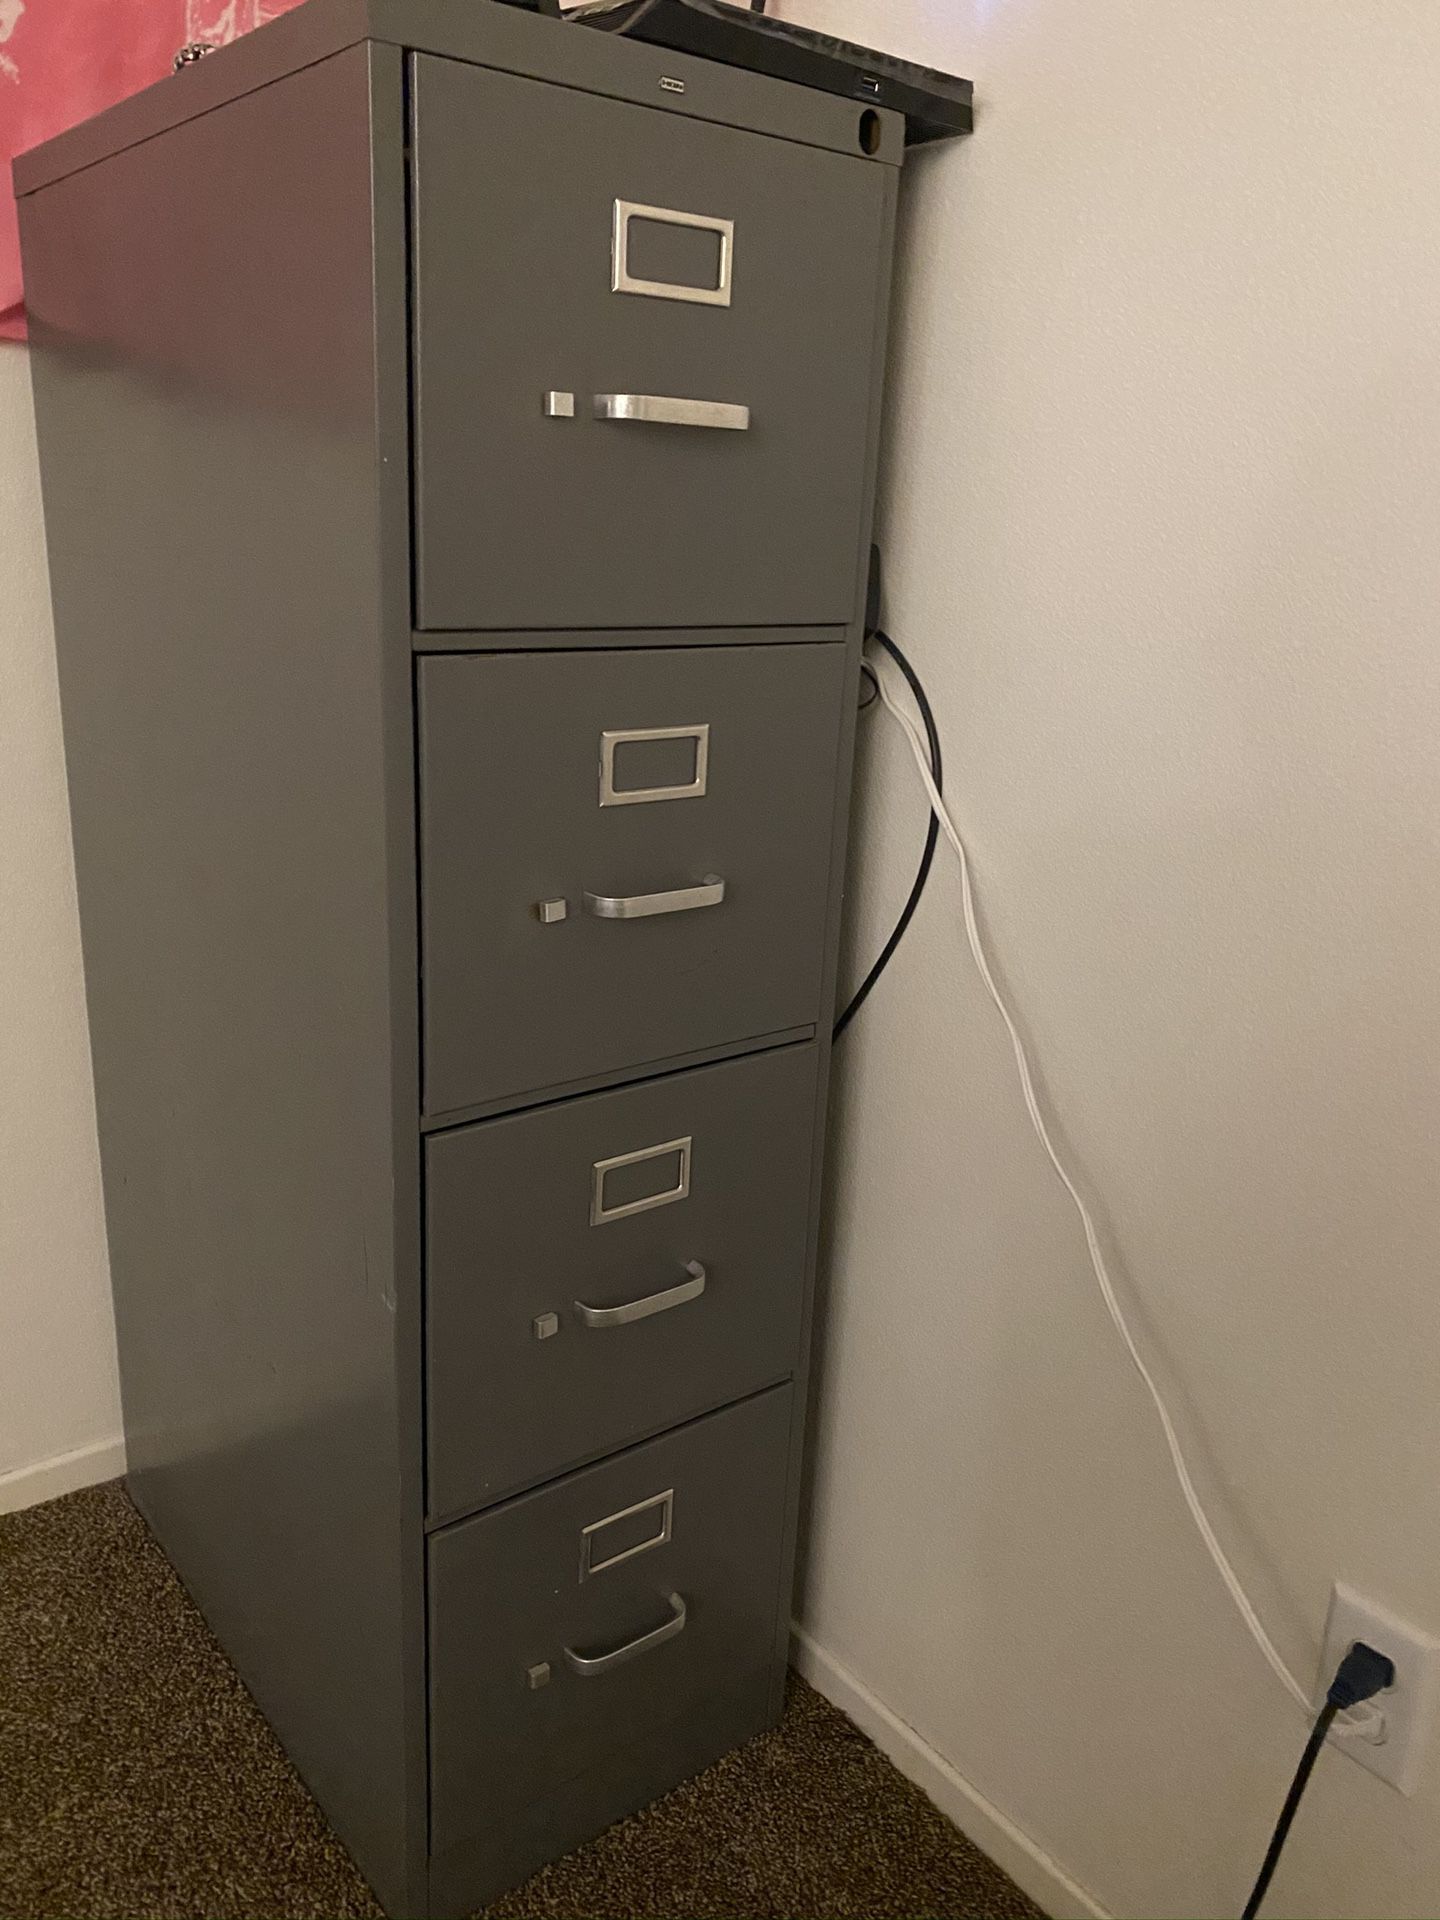 File cabinet- good condition